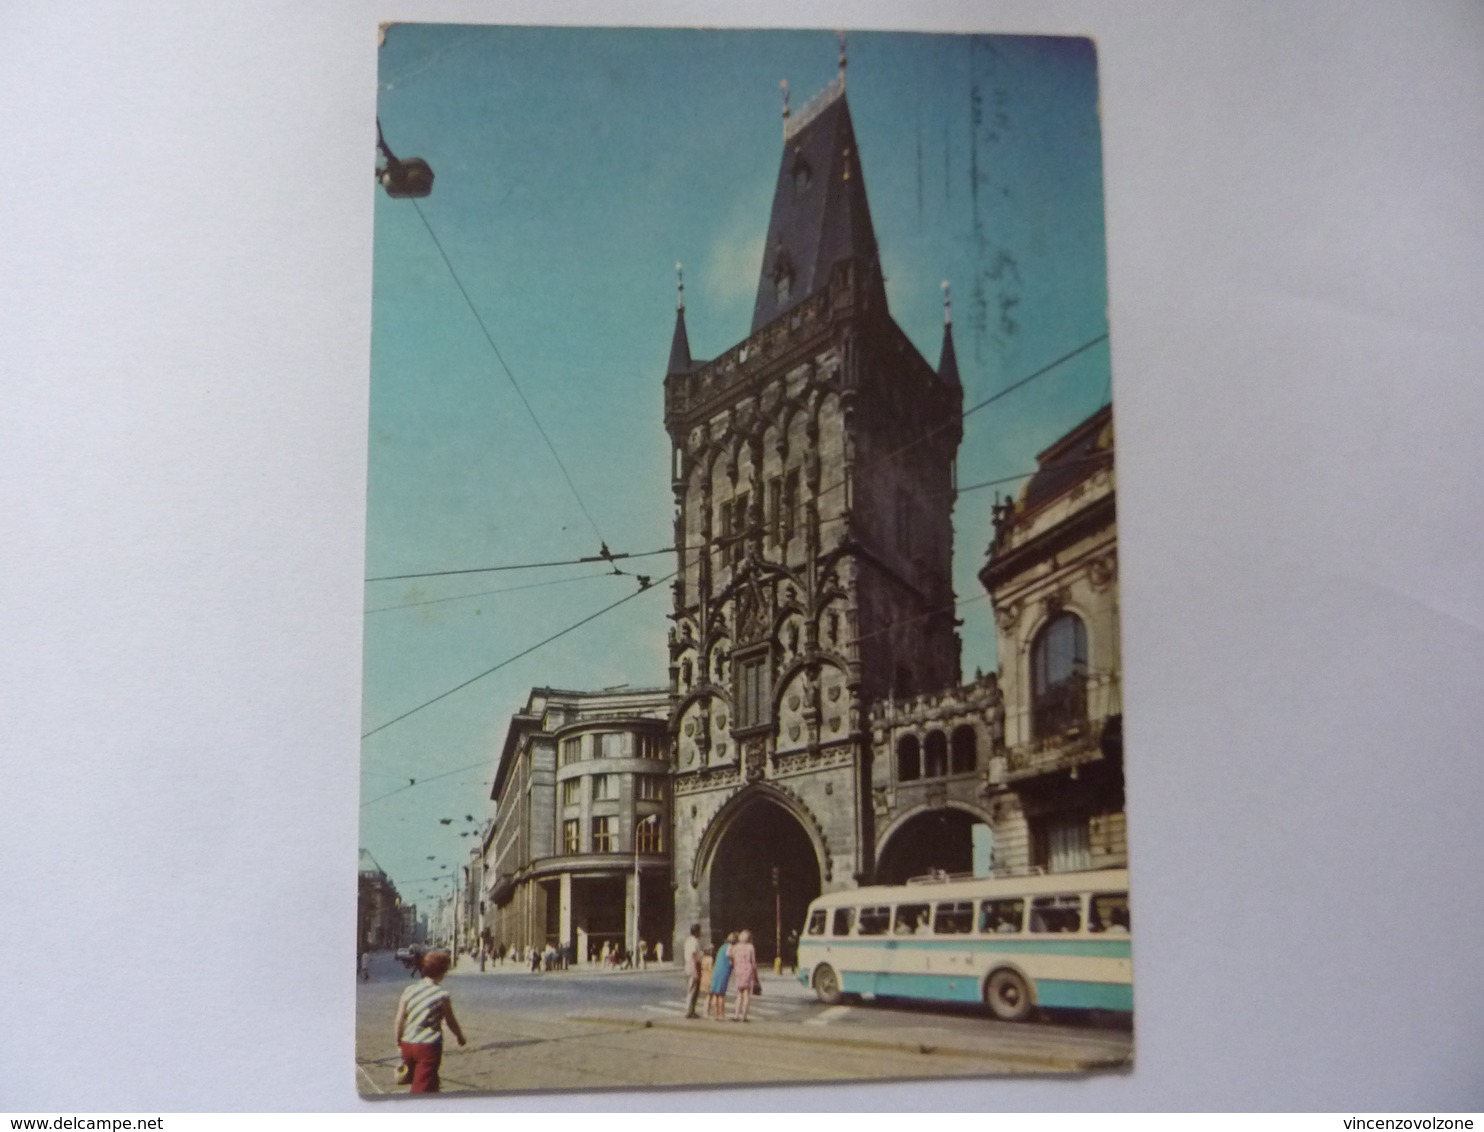 Cartolina Viaggiata "PRAHA" 1970 - Repubblica Ceca